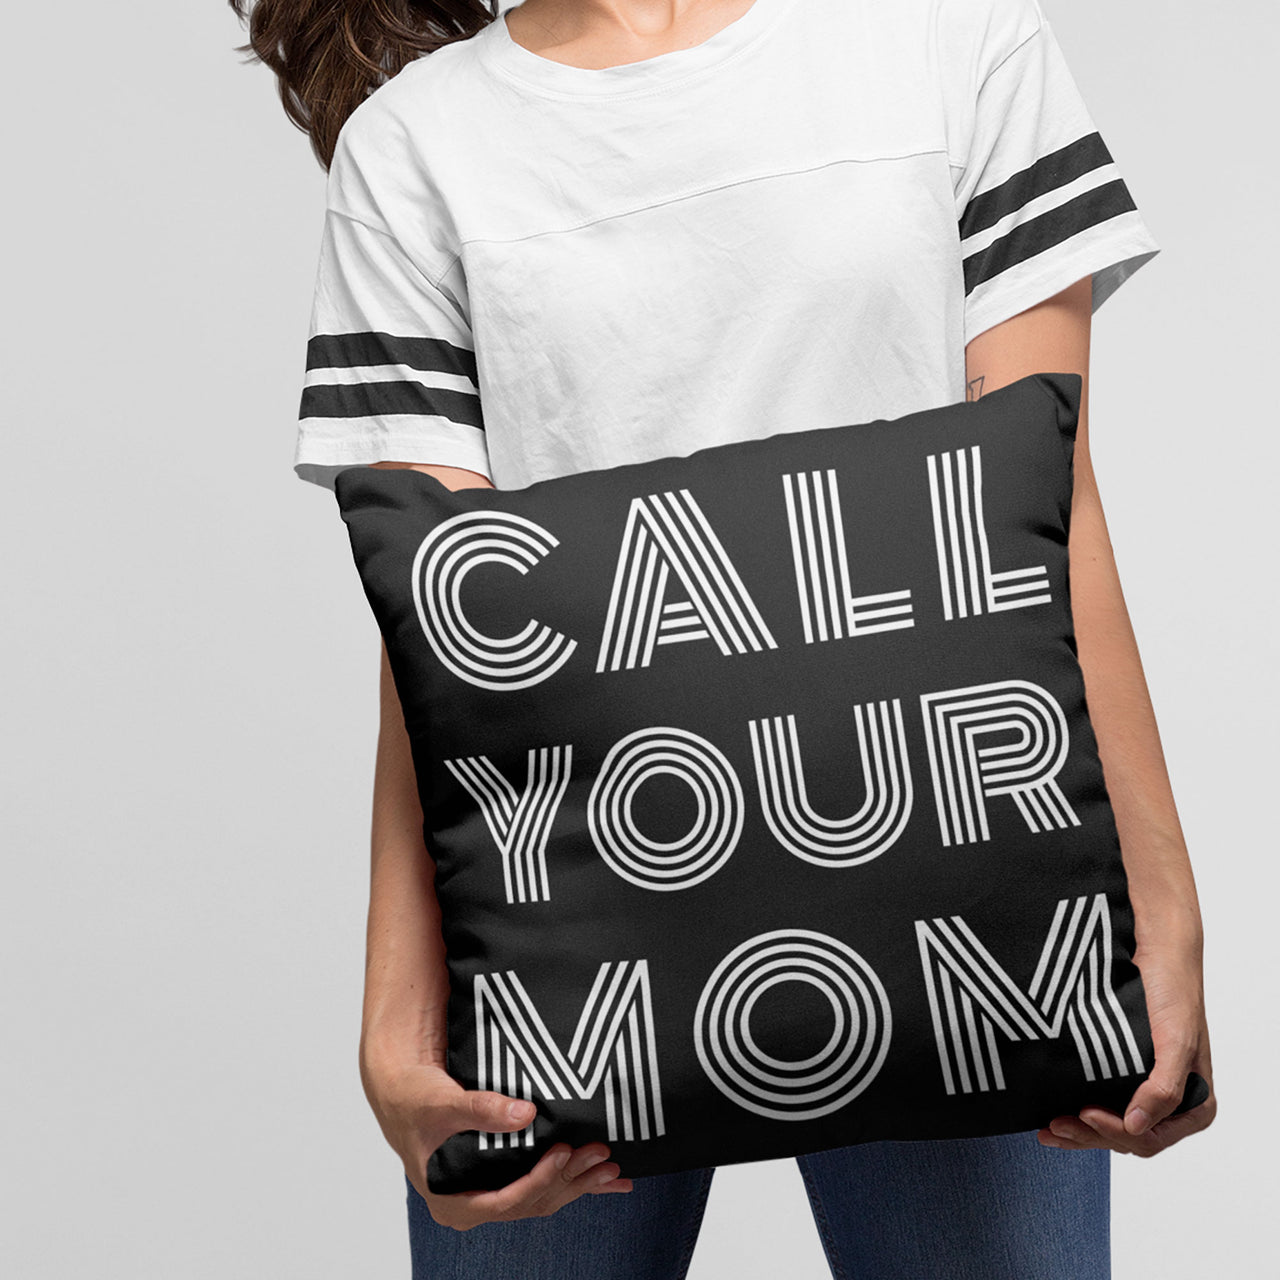 Call Your Mom Pillow, College Dorm Pillow, College Decor, Black